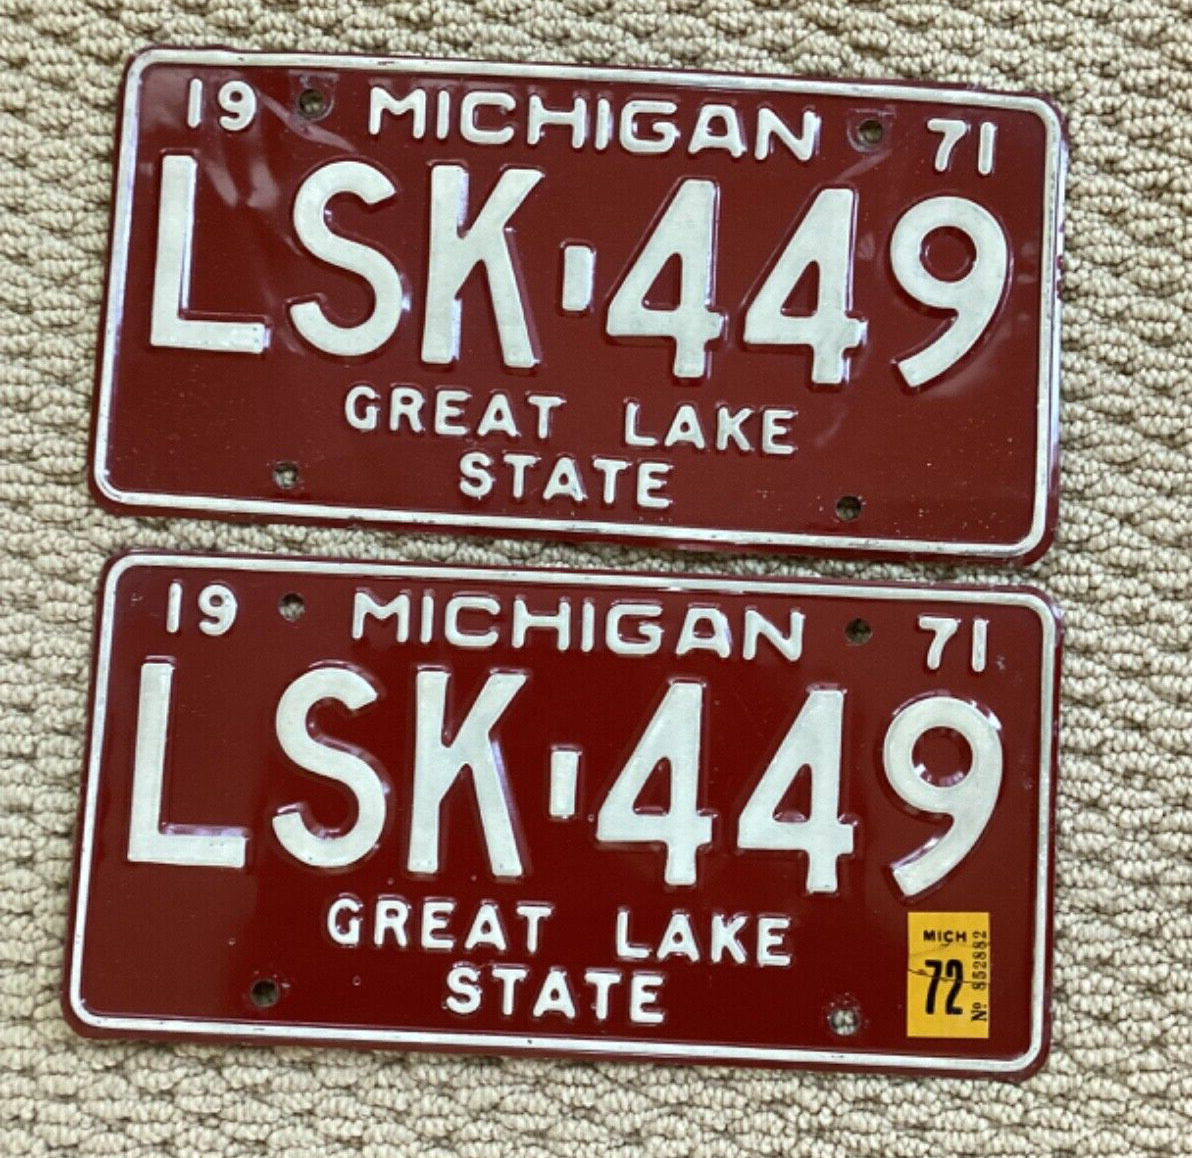 1971 MICHIGAN License plate Matching pair LSK-449